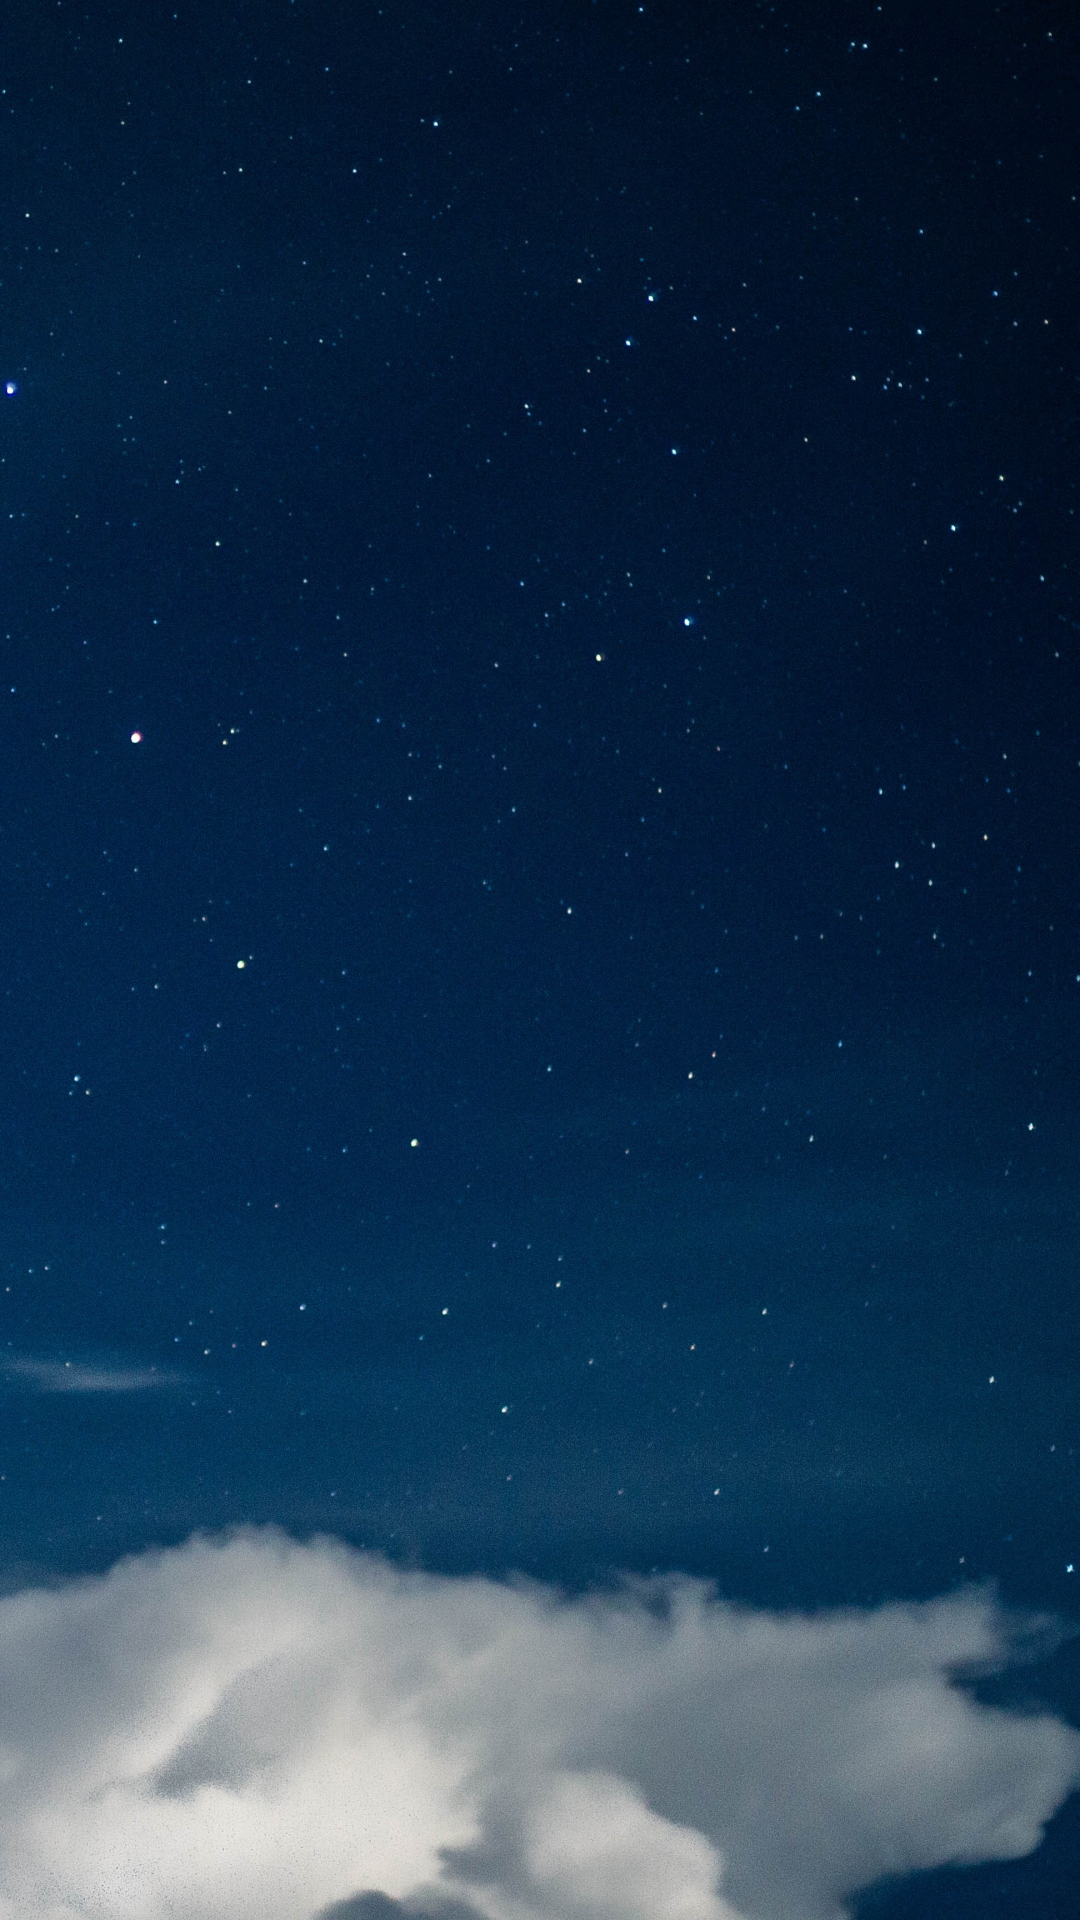 Night Sky Iphone Wallpaper - Dark Blue Sky With Stars - 1080x1920 Wallpaper  